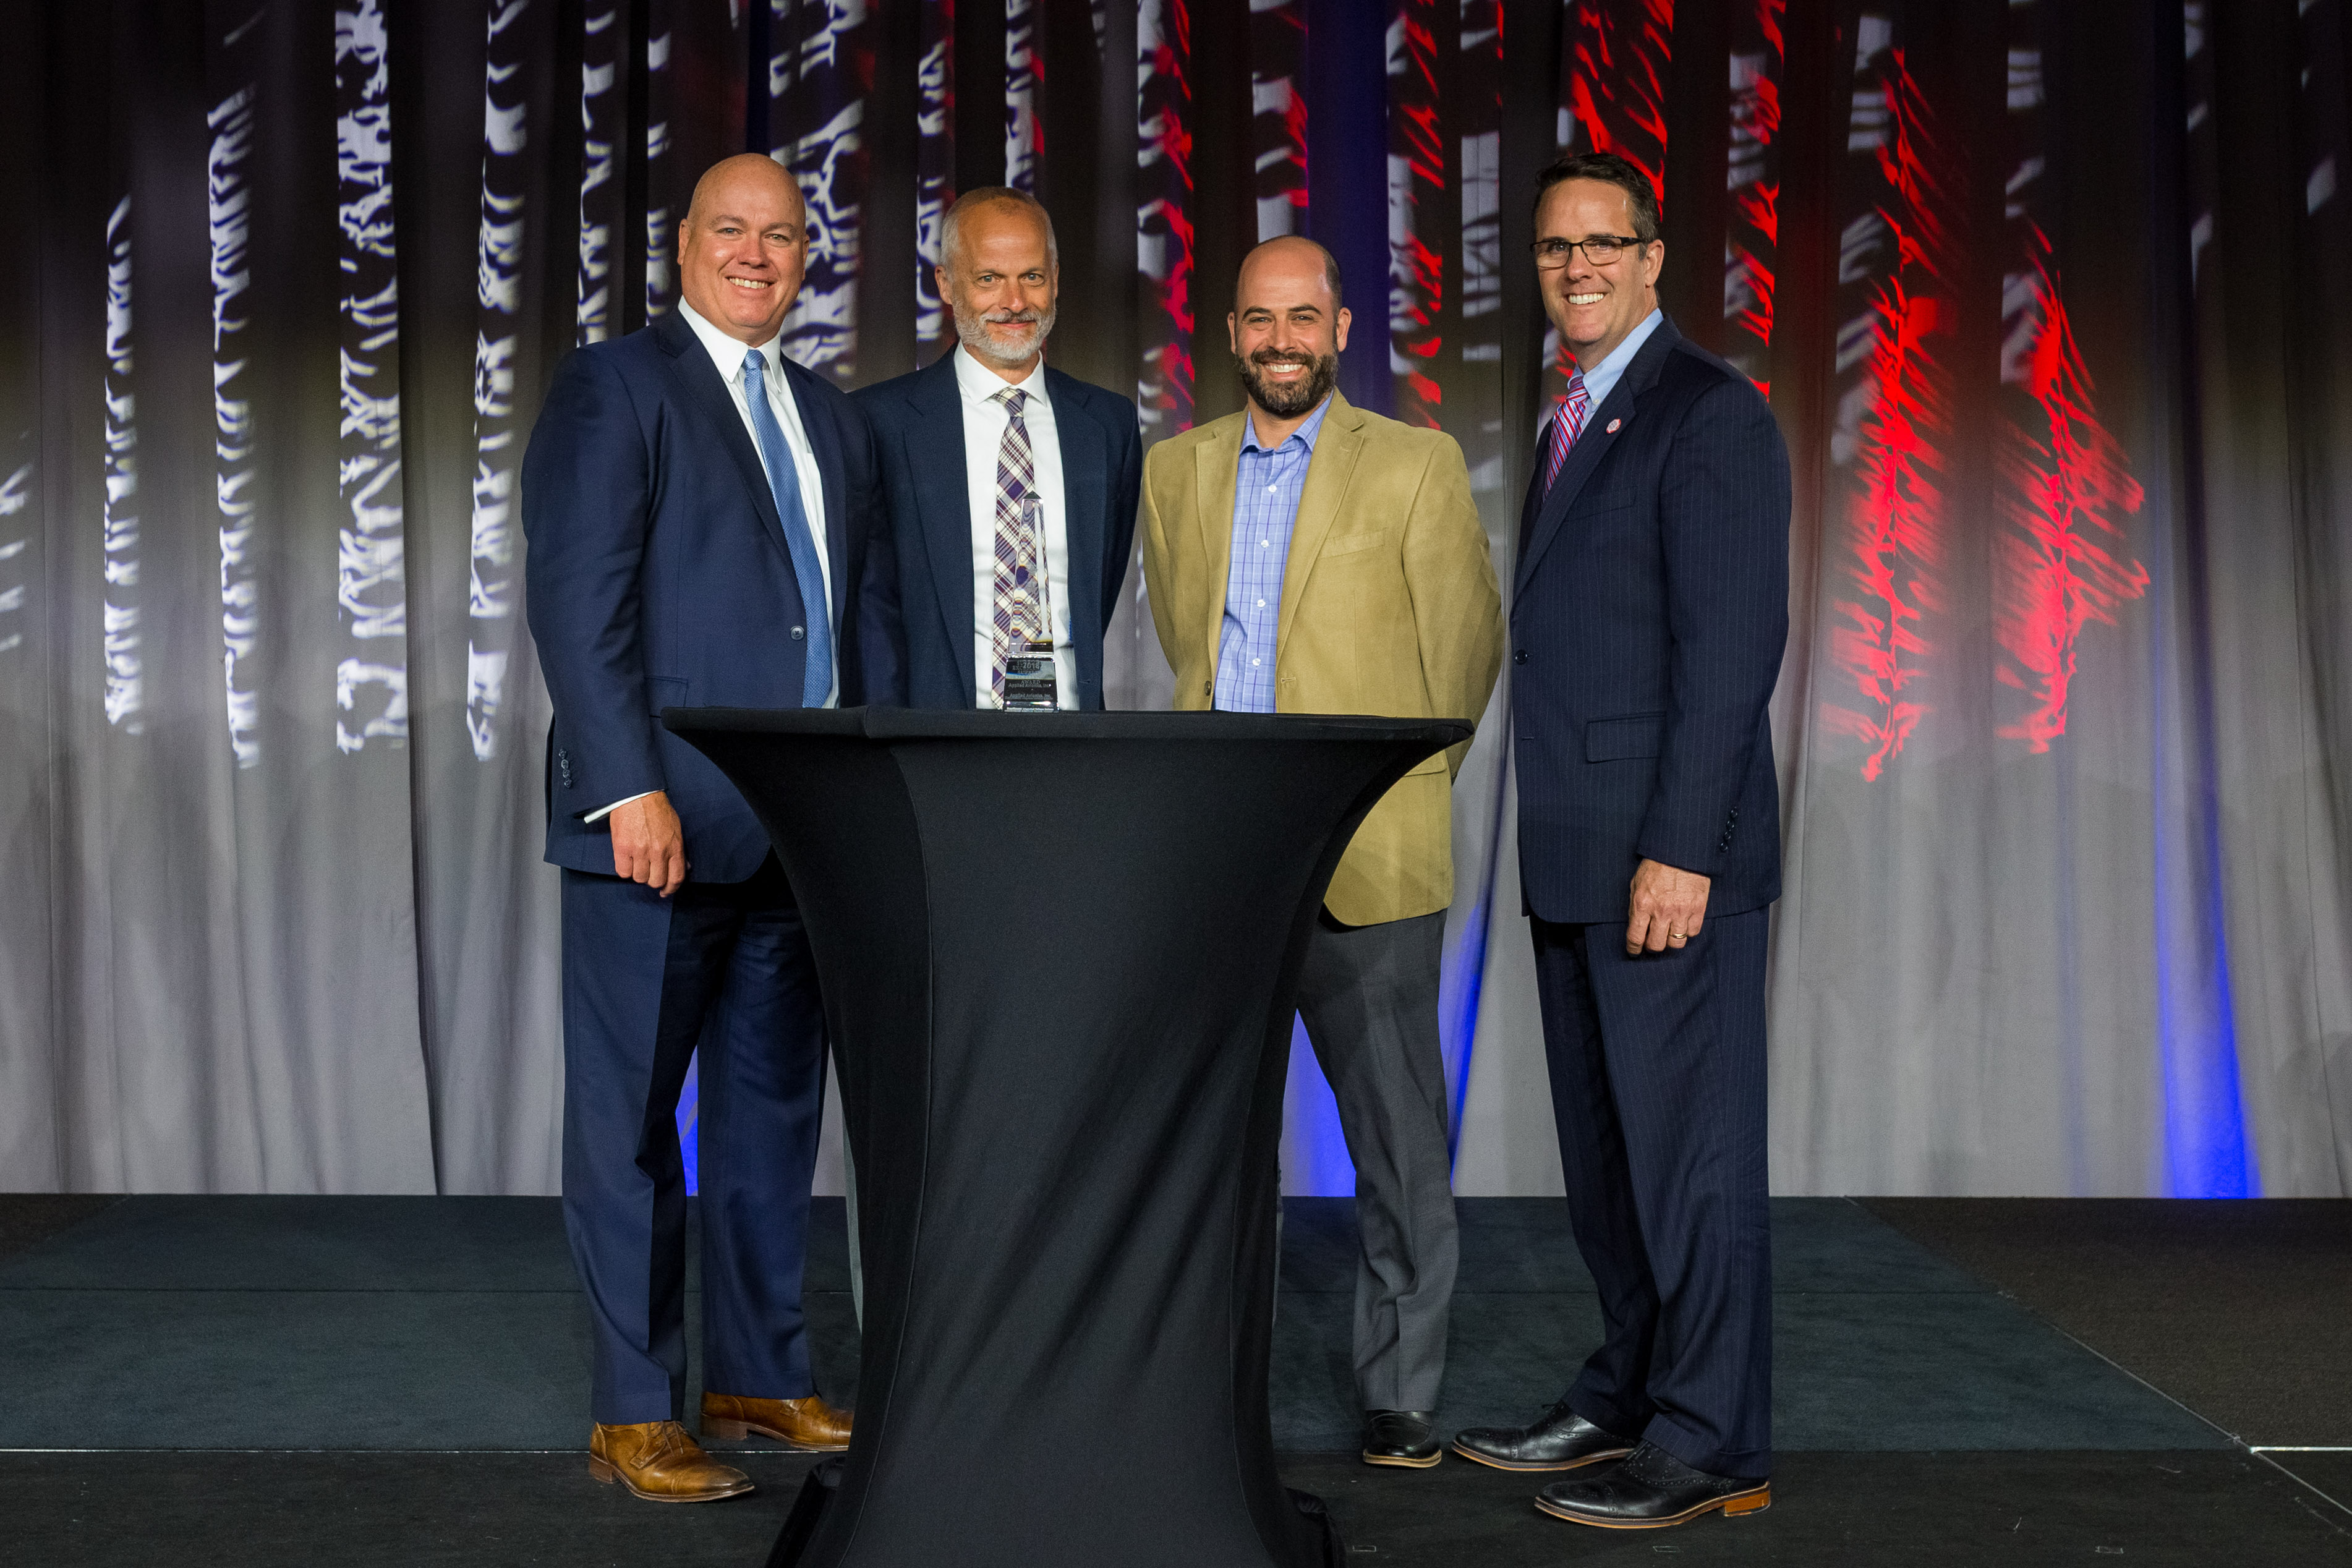 McGill 2019 IDS Award